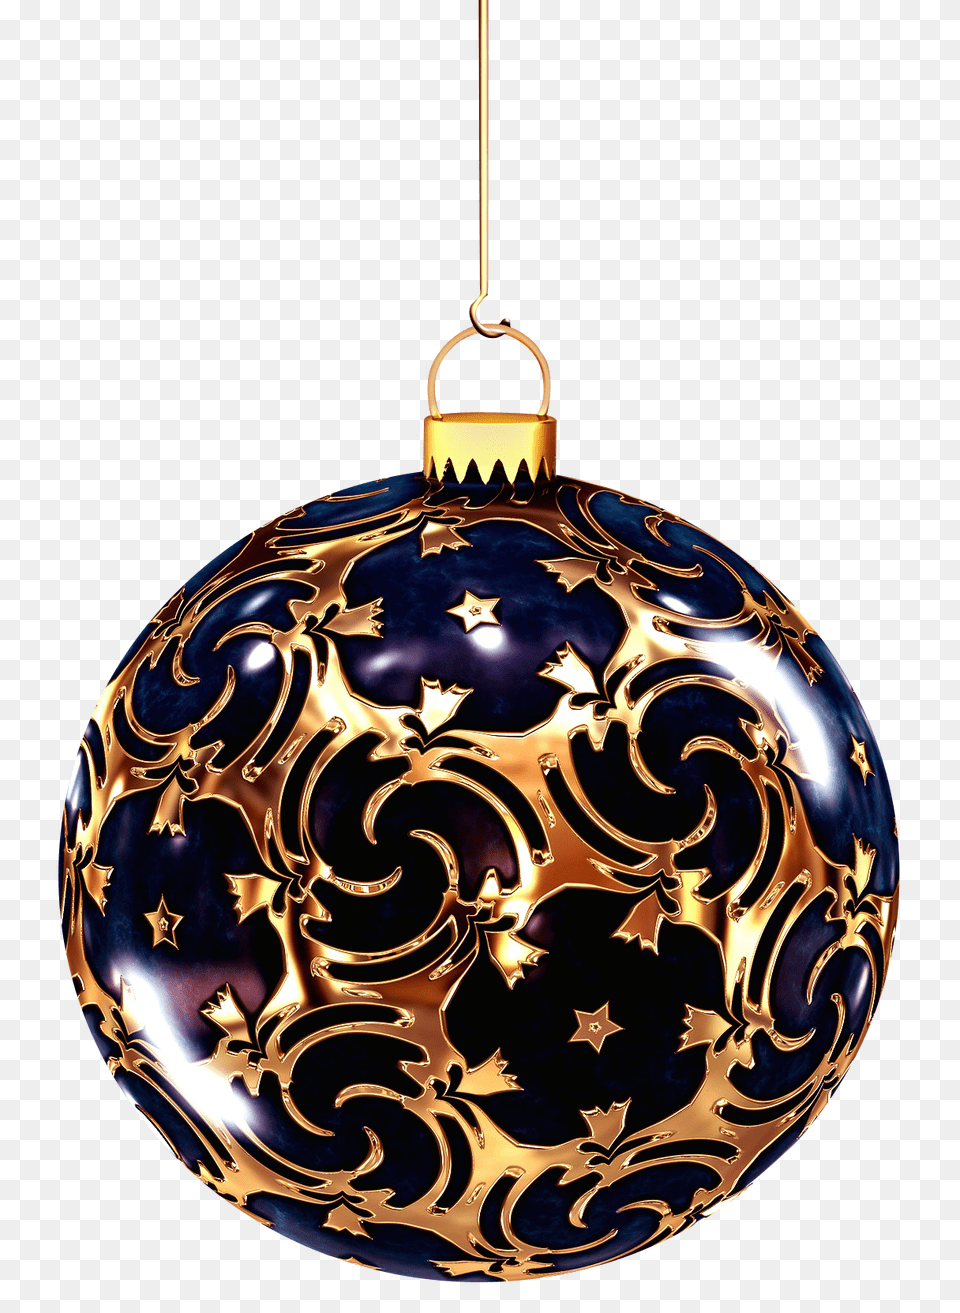 Pngpix Com Christmas Bauble Lamp, Accessories, Chandelier Png Image